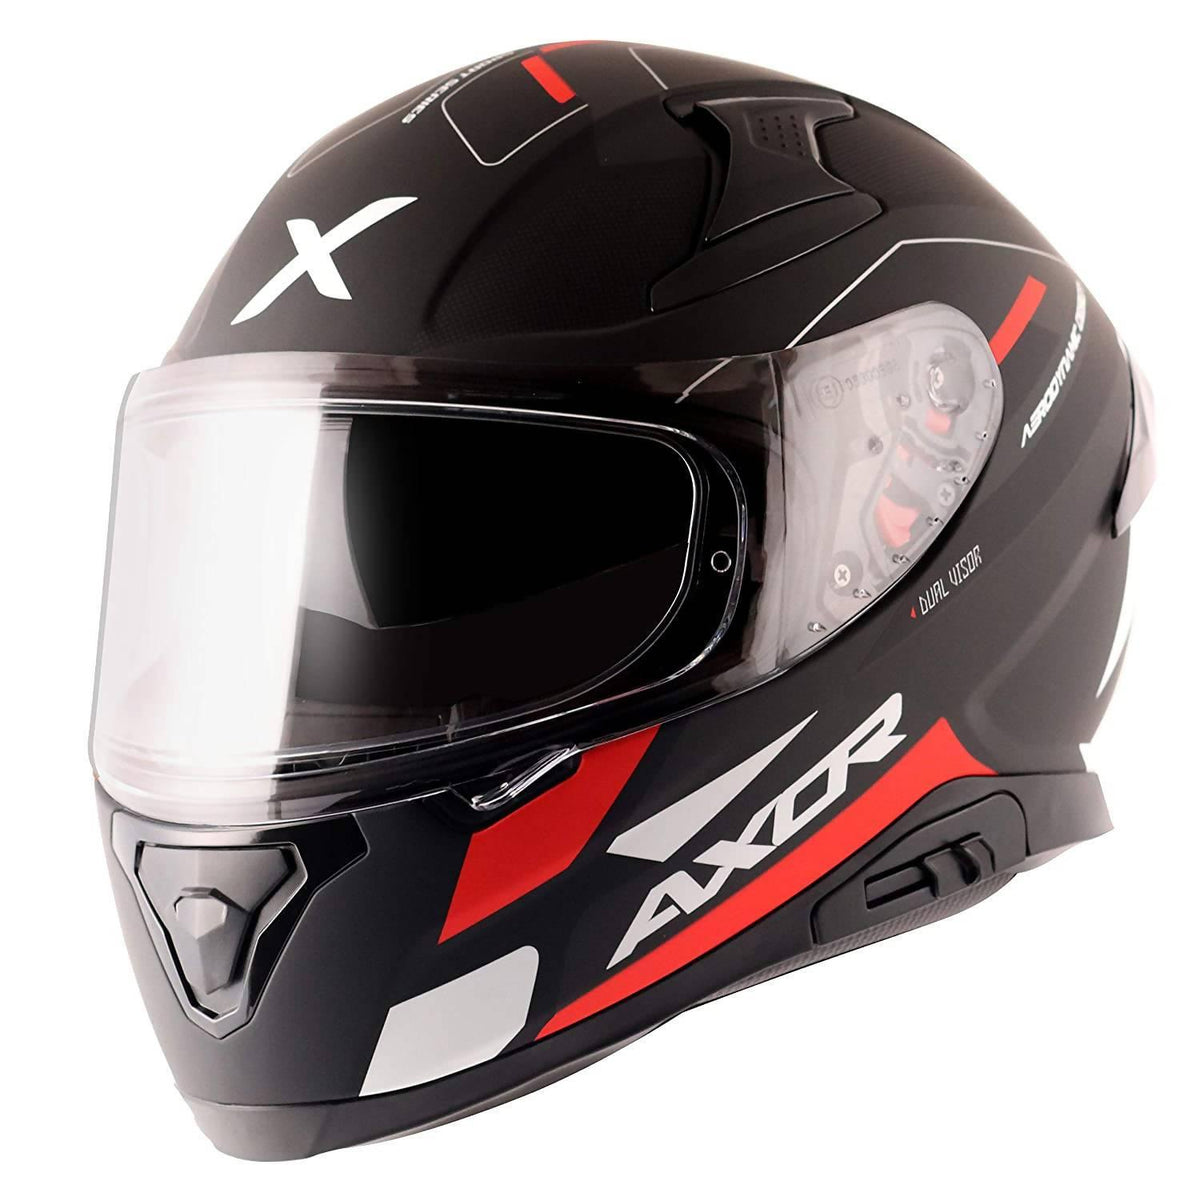 Axor Apex Turbine Helmet (Dull Black Red Grey)